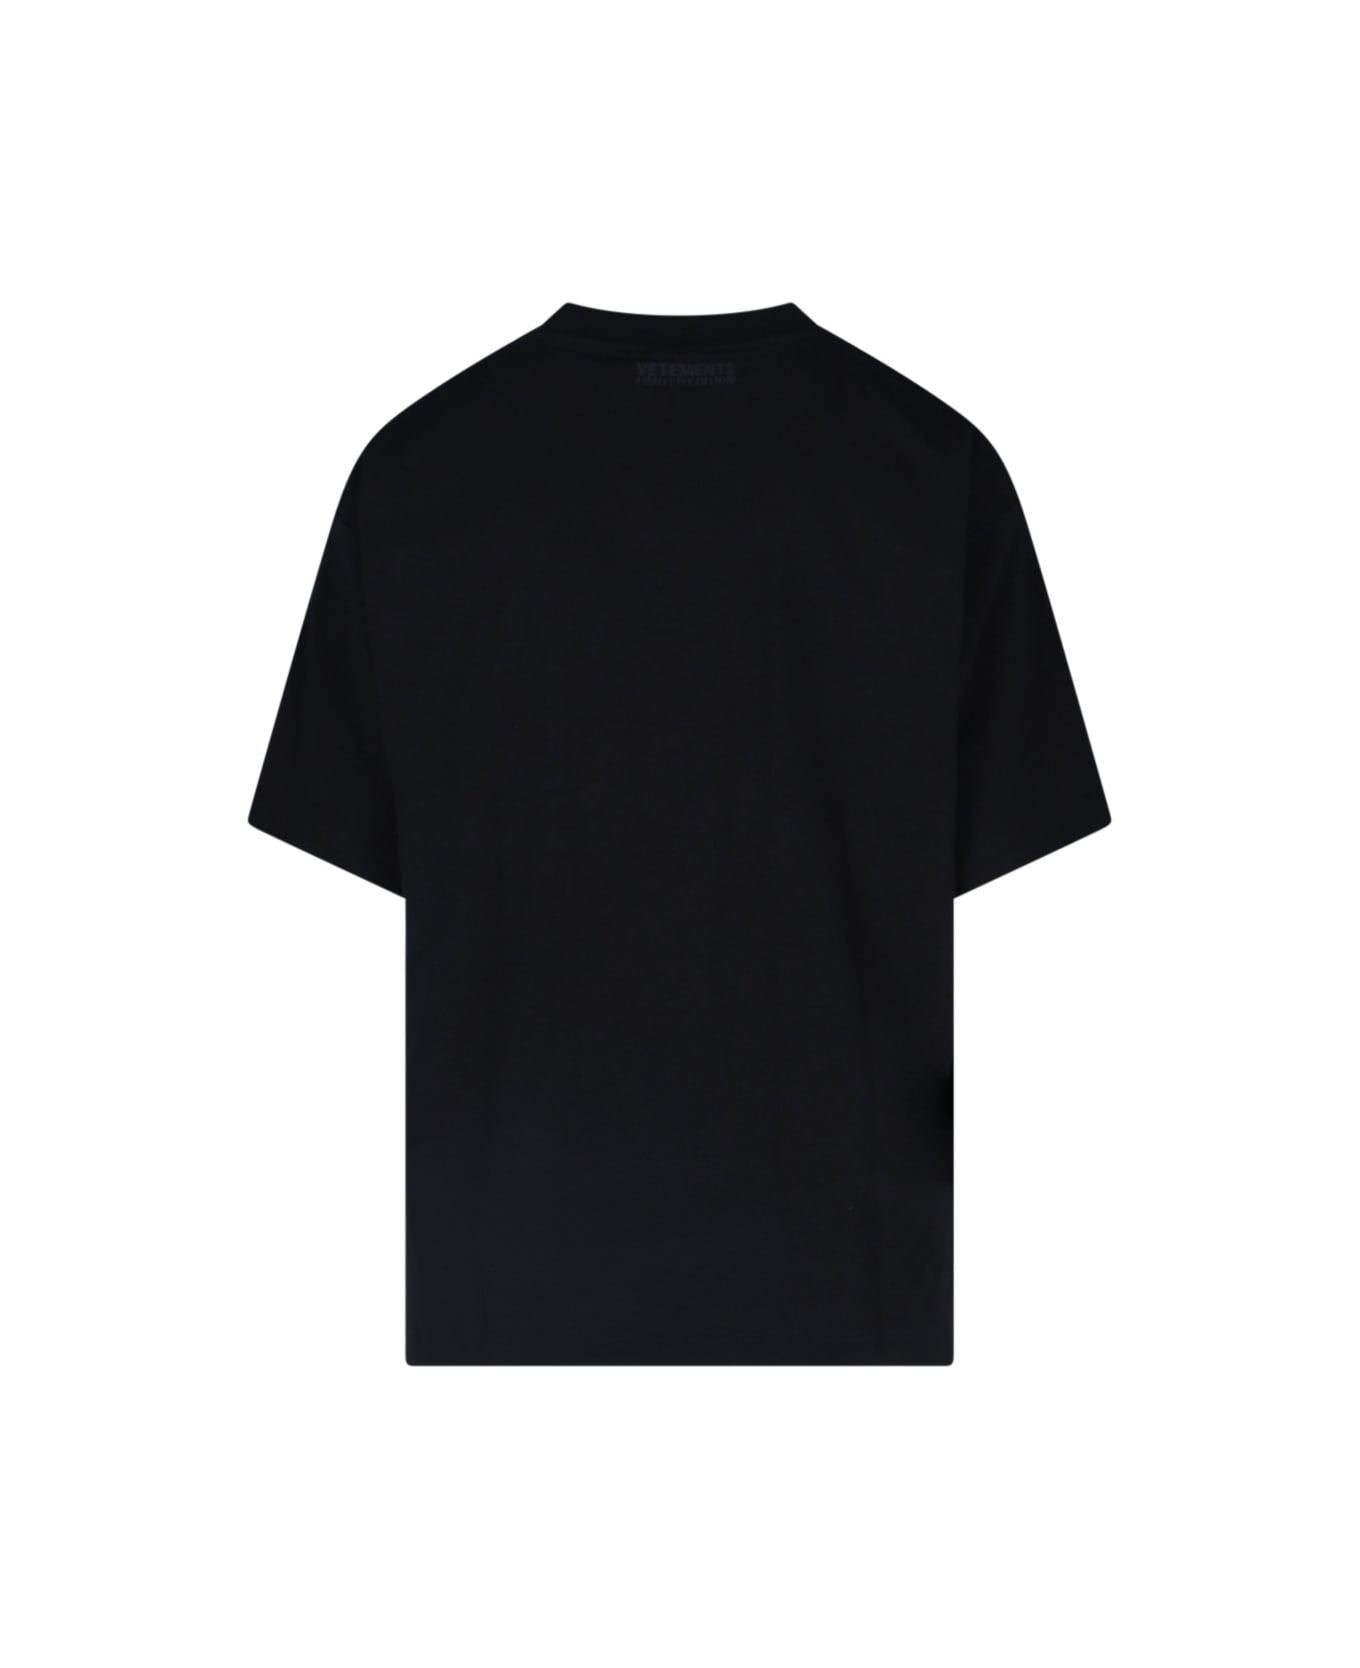 VETEMENTS T-Shirt - Black